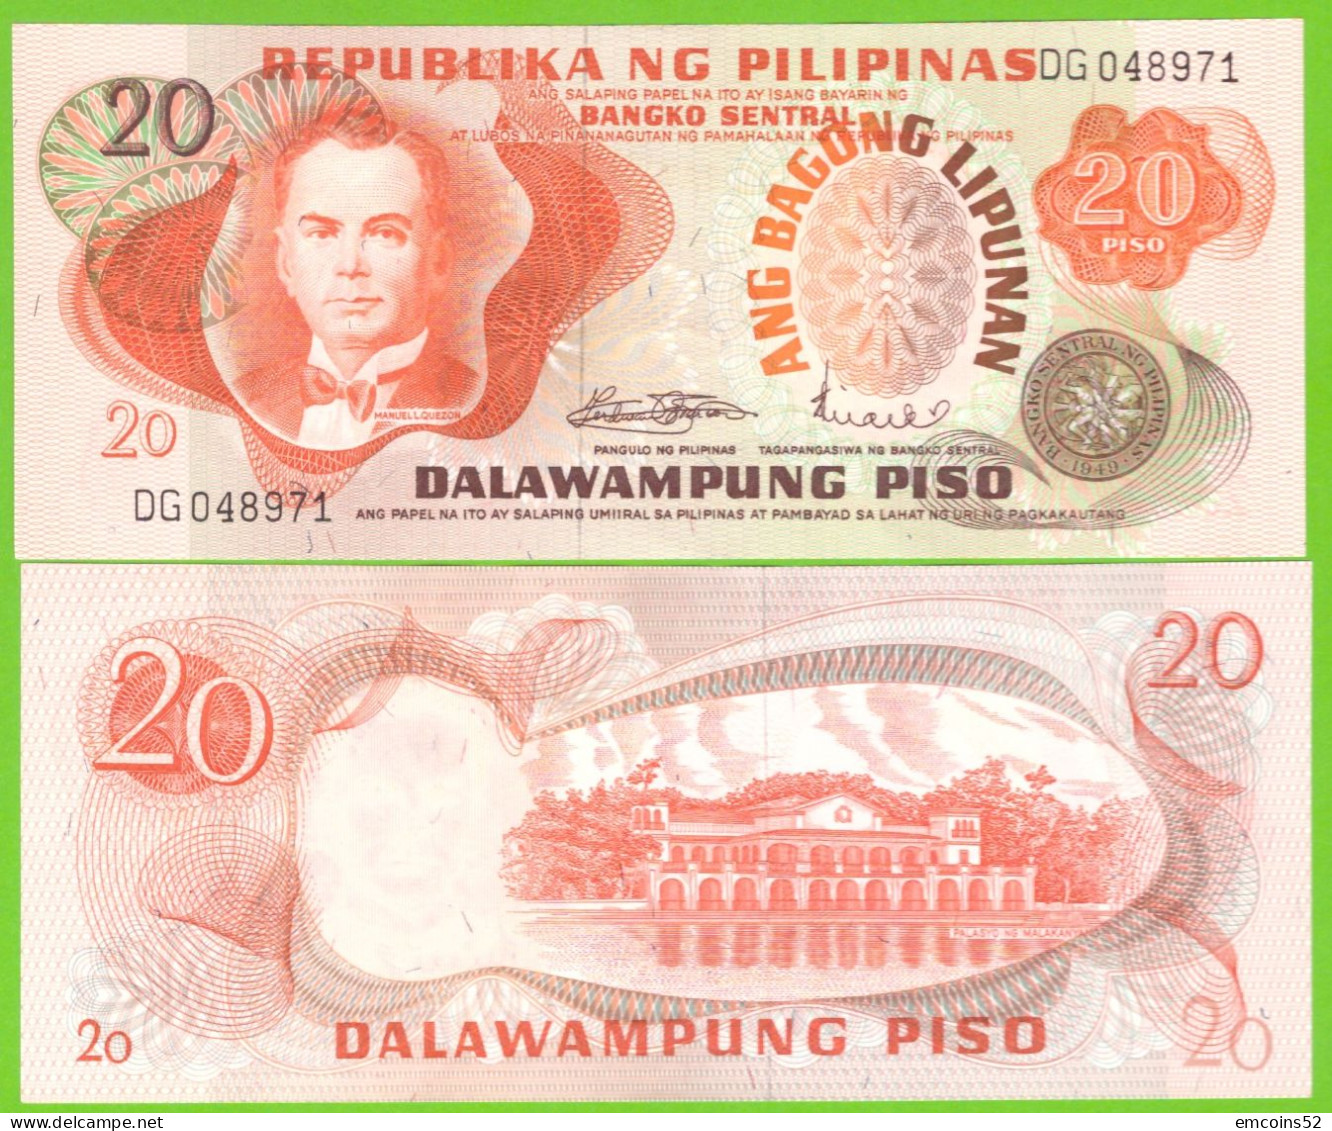 PHILIPPINES 20 PISO ND 1970  P-155 UNC - Philippinen